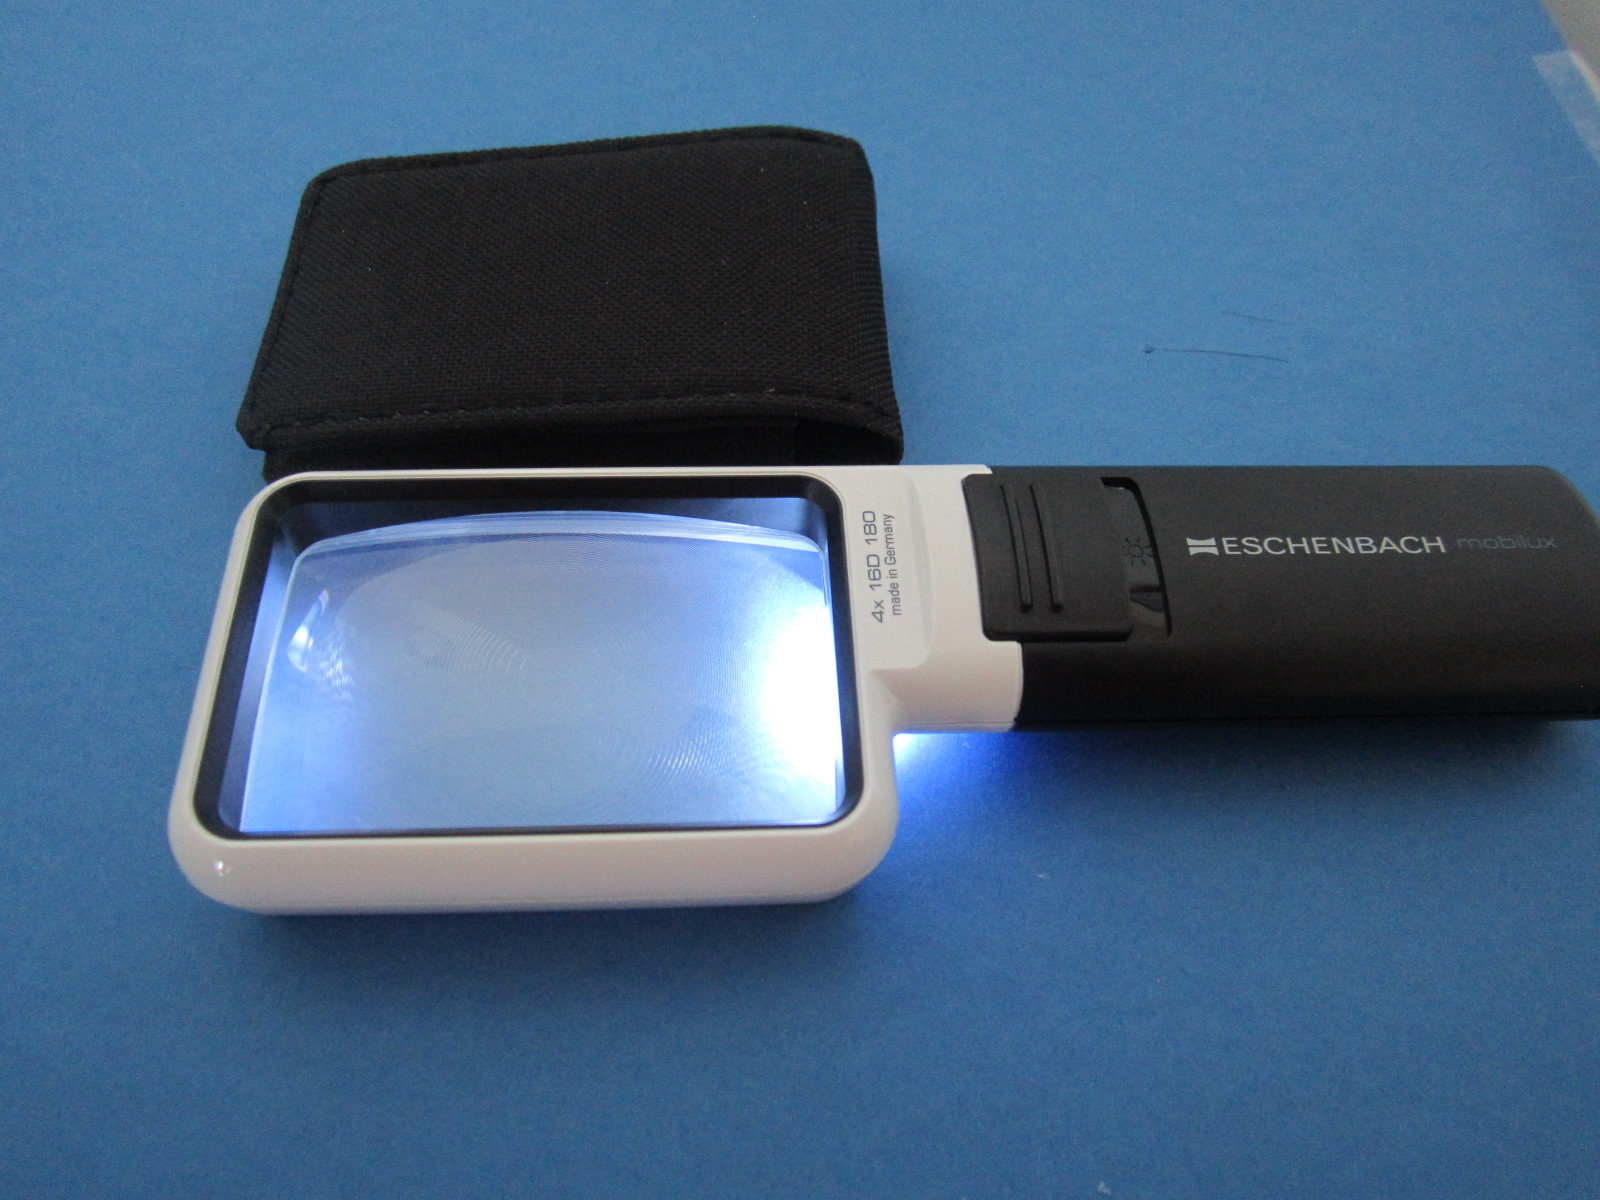 Mobilux Led magnifying glass 4x squre from Butik KIK - AssistData